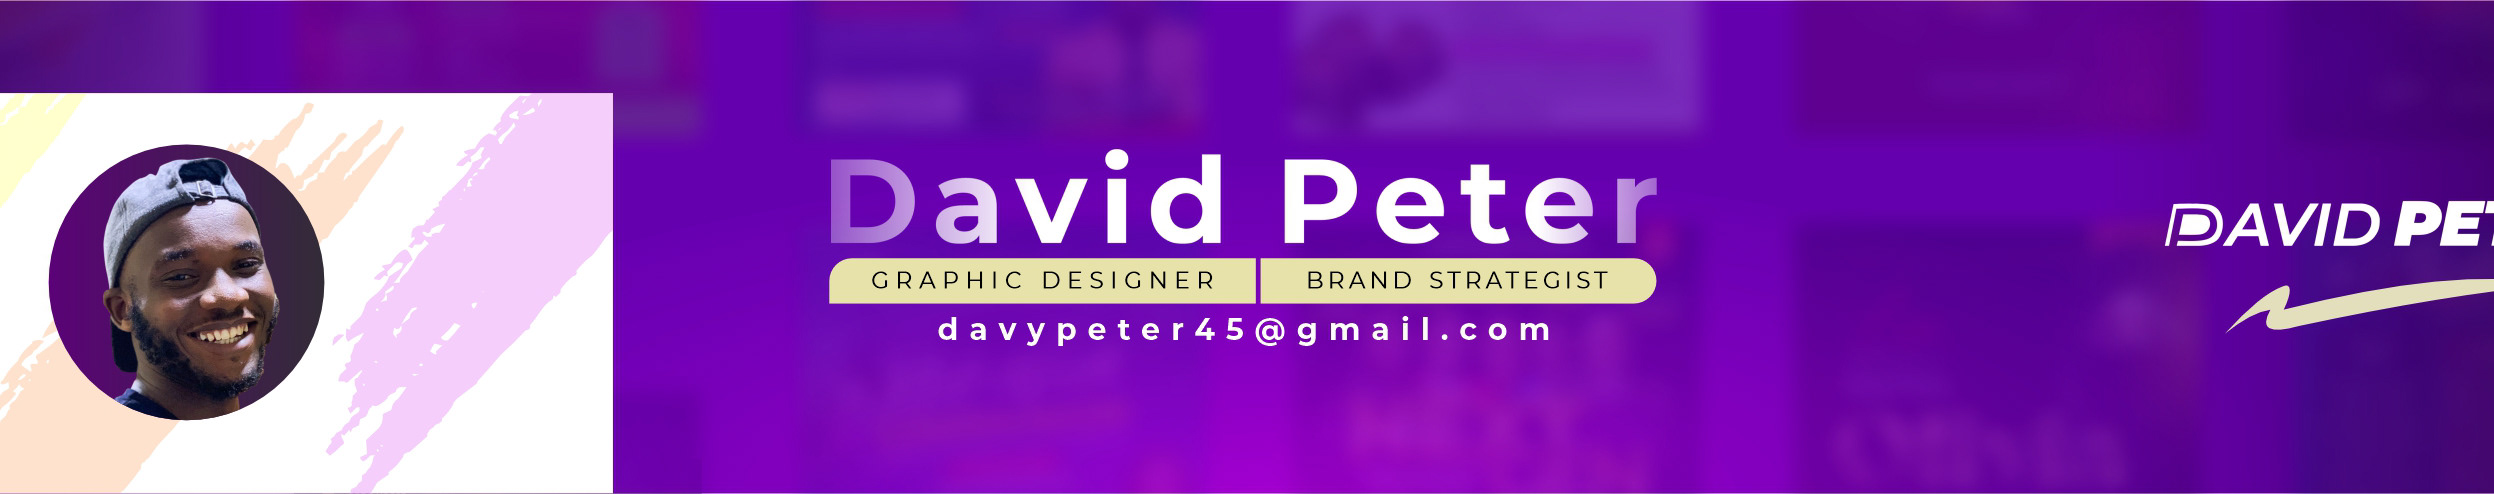 David Peter's profile banner